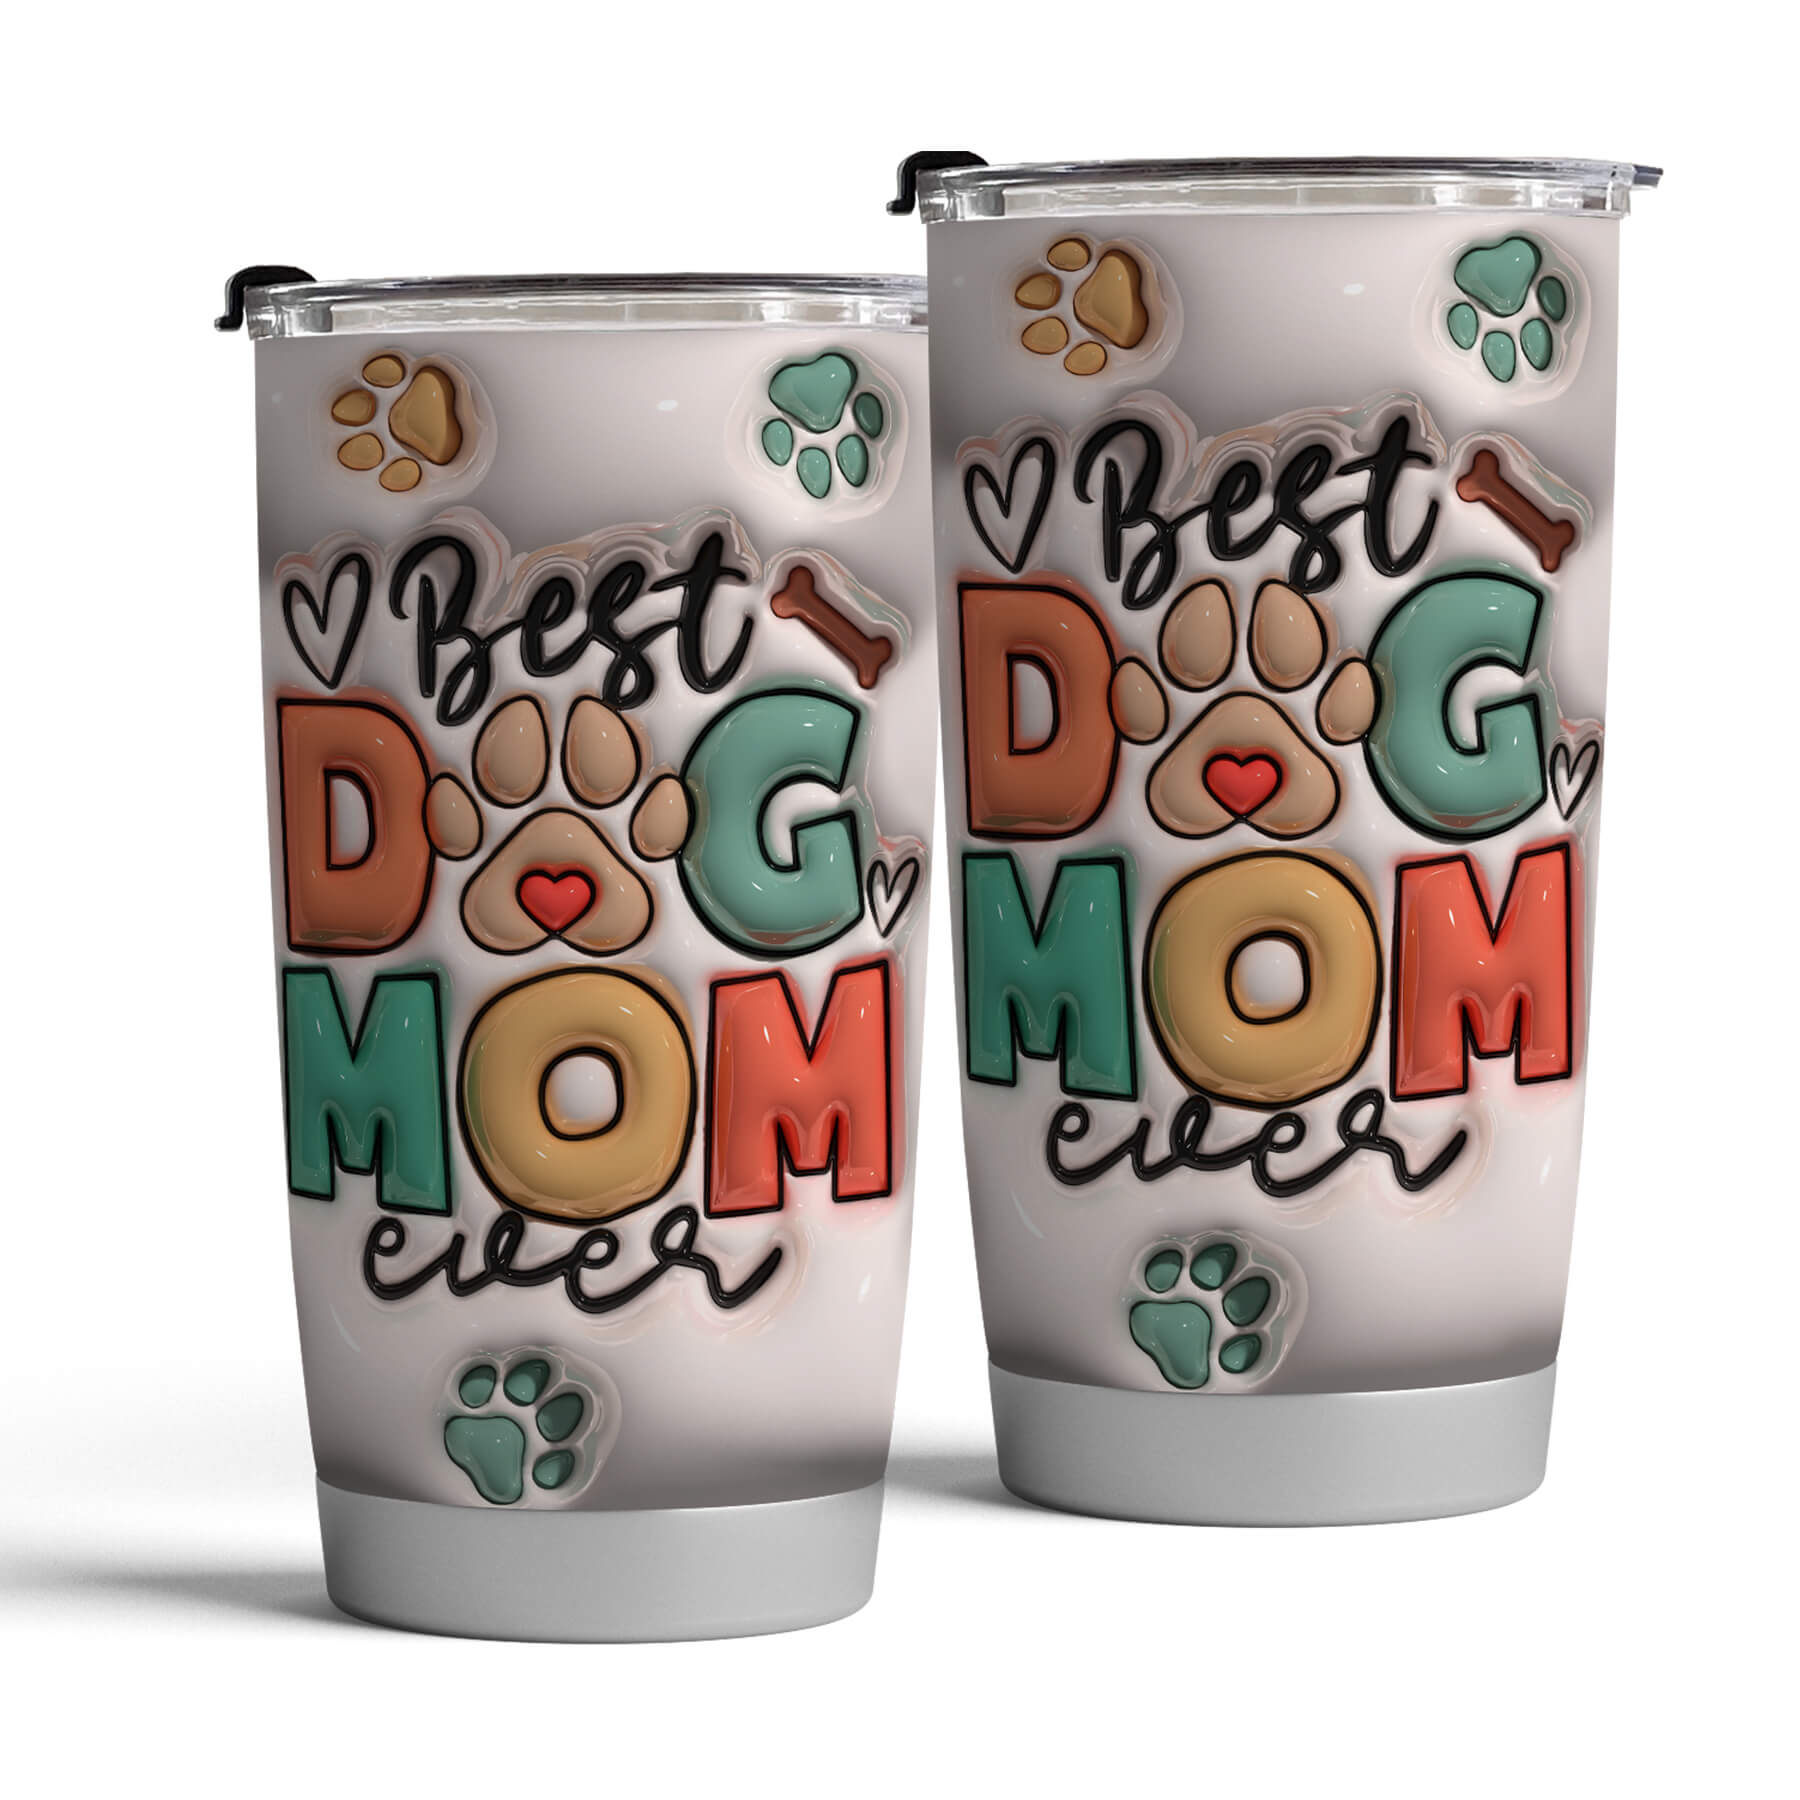 20oz 'Best Dog Mom' Stainless Steel Tumbler - Ideal Gift for Dog-Loving Women - fancyfams